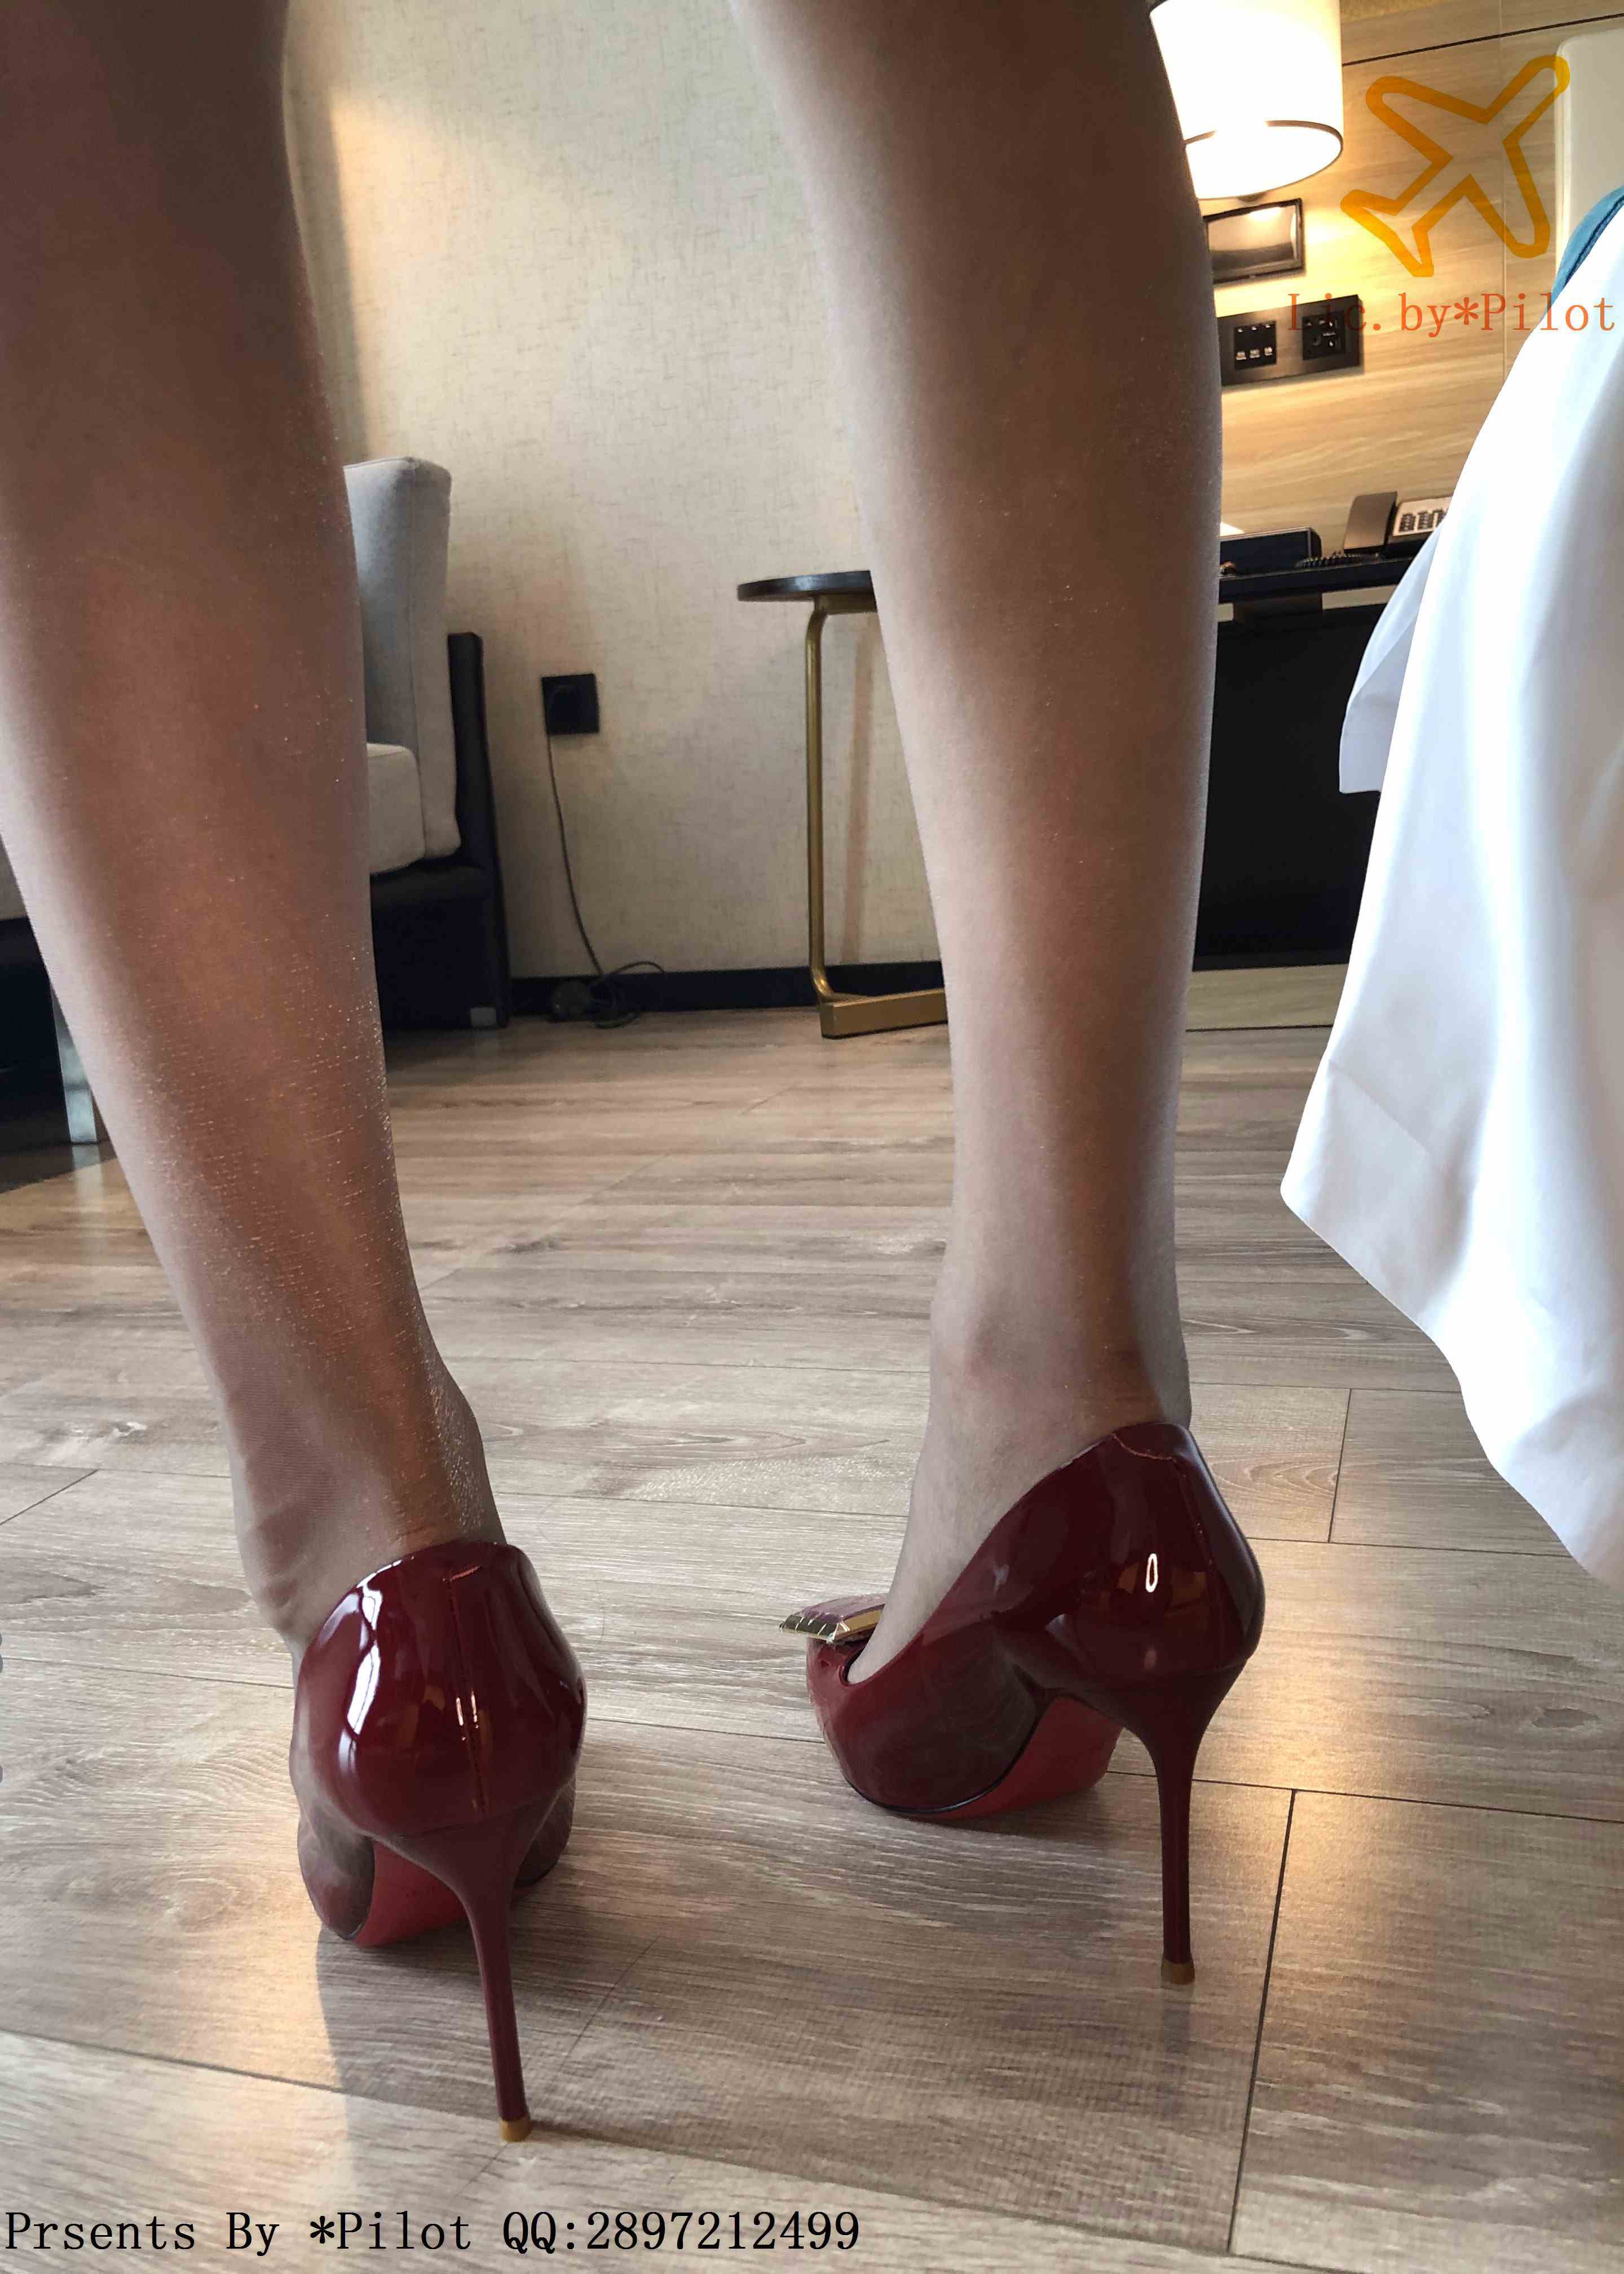 China Beauty Legs and feet 661